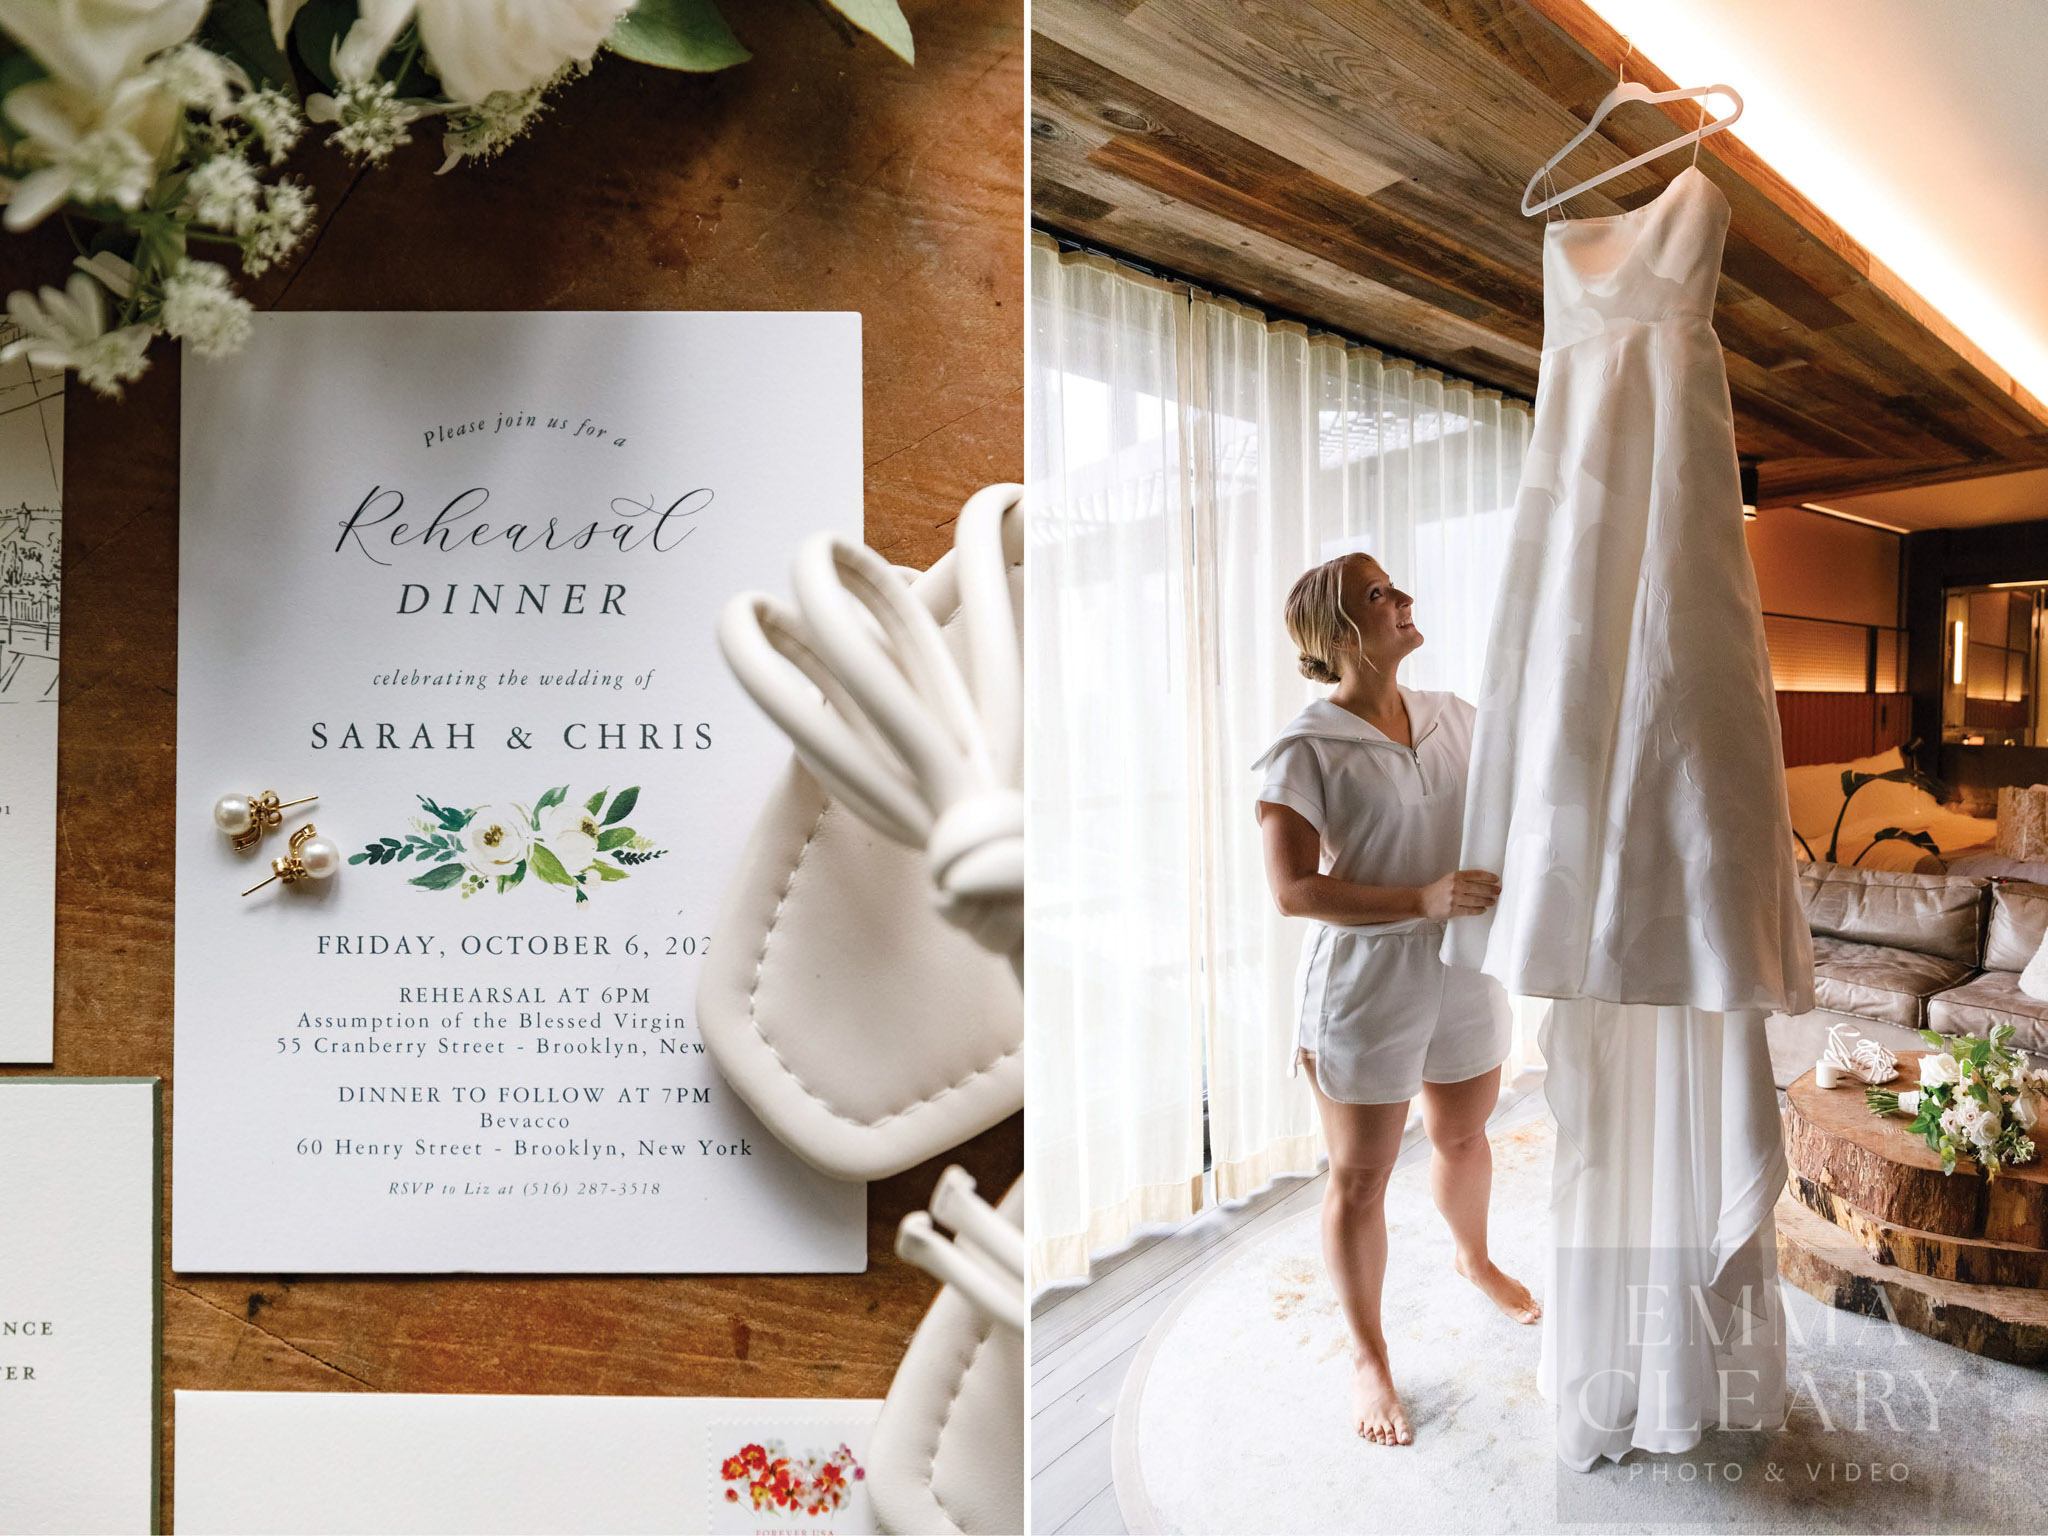 Invitation, bride and wedding dress